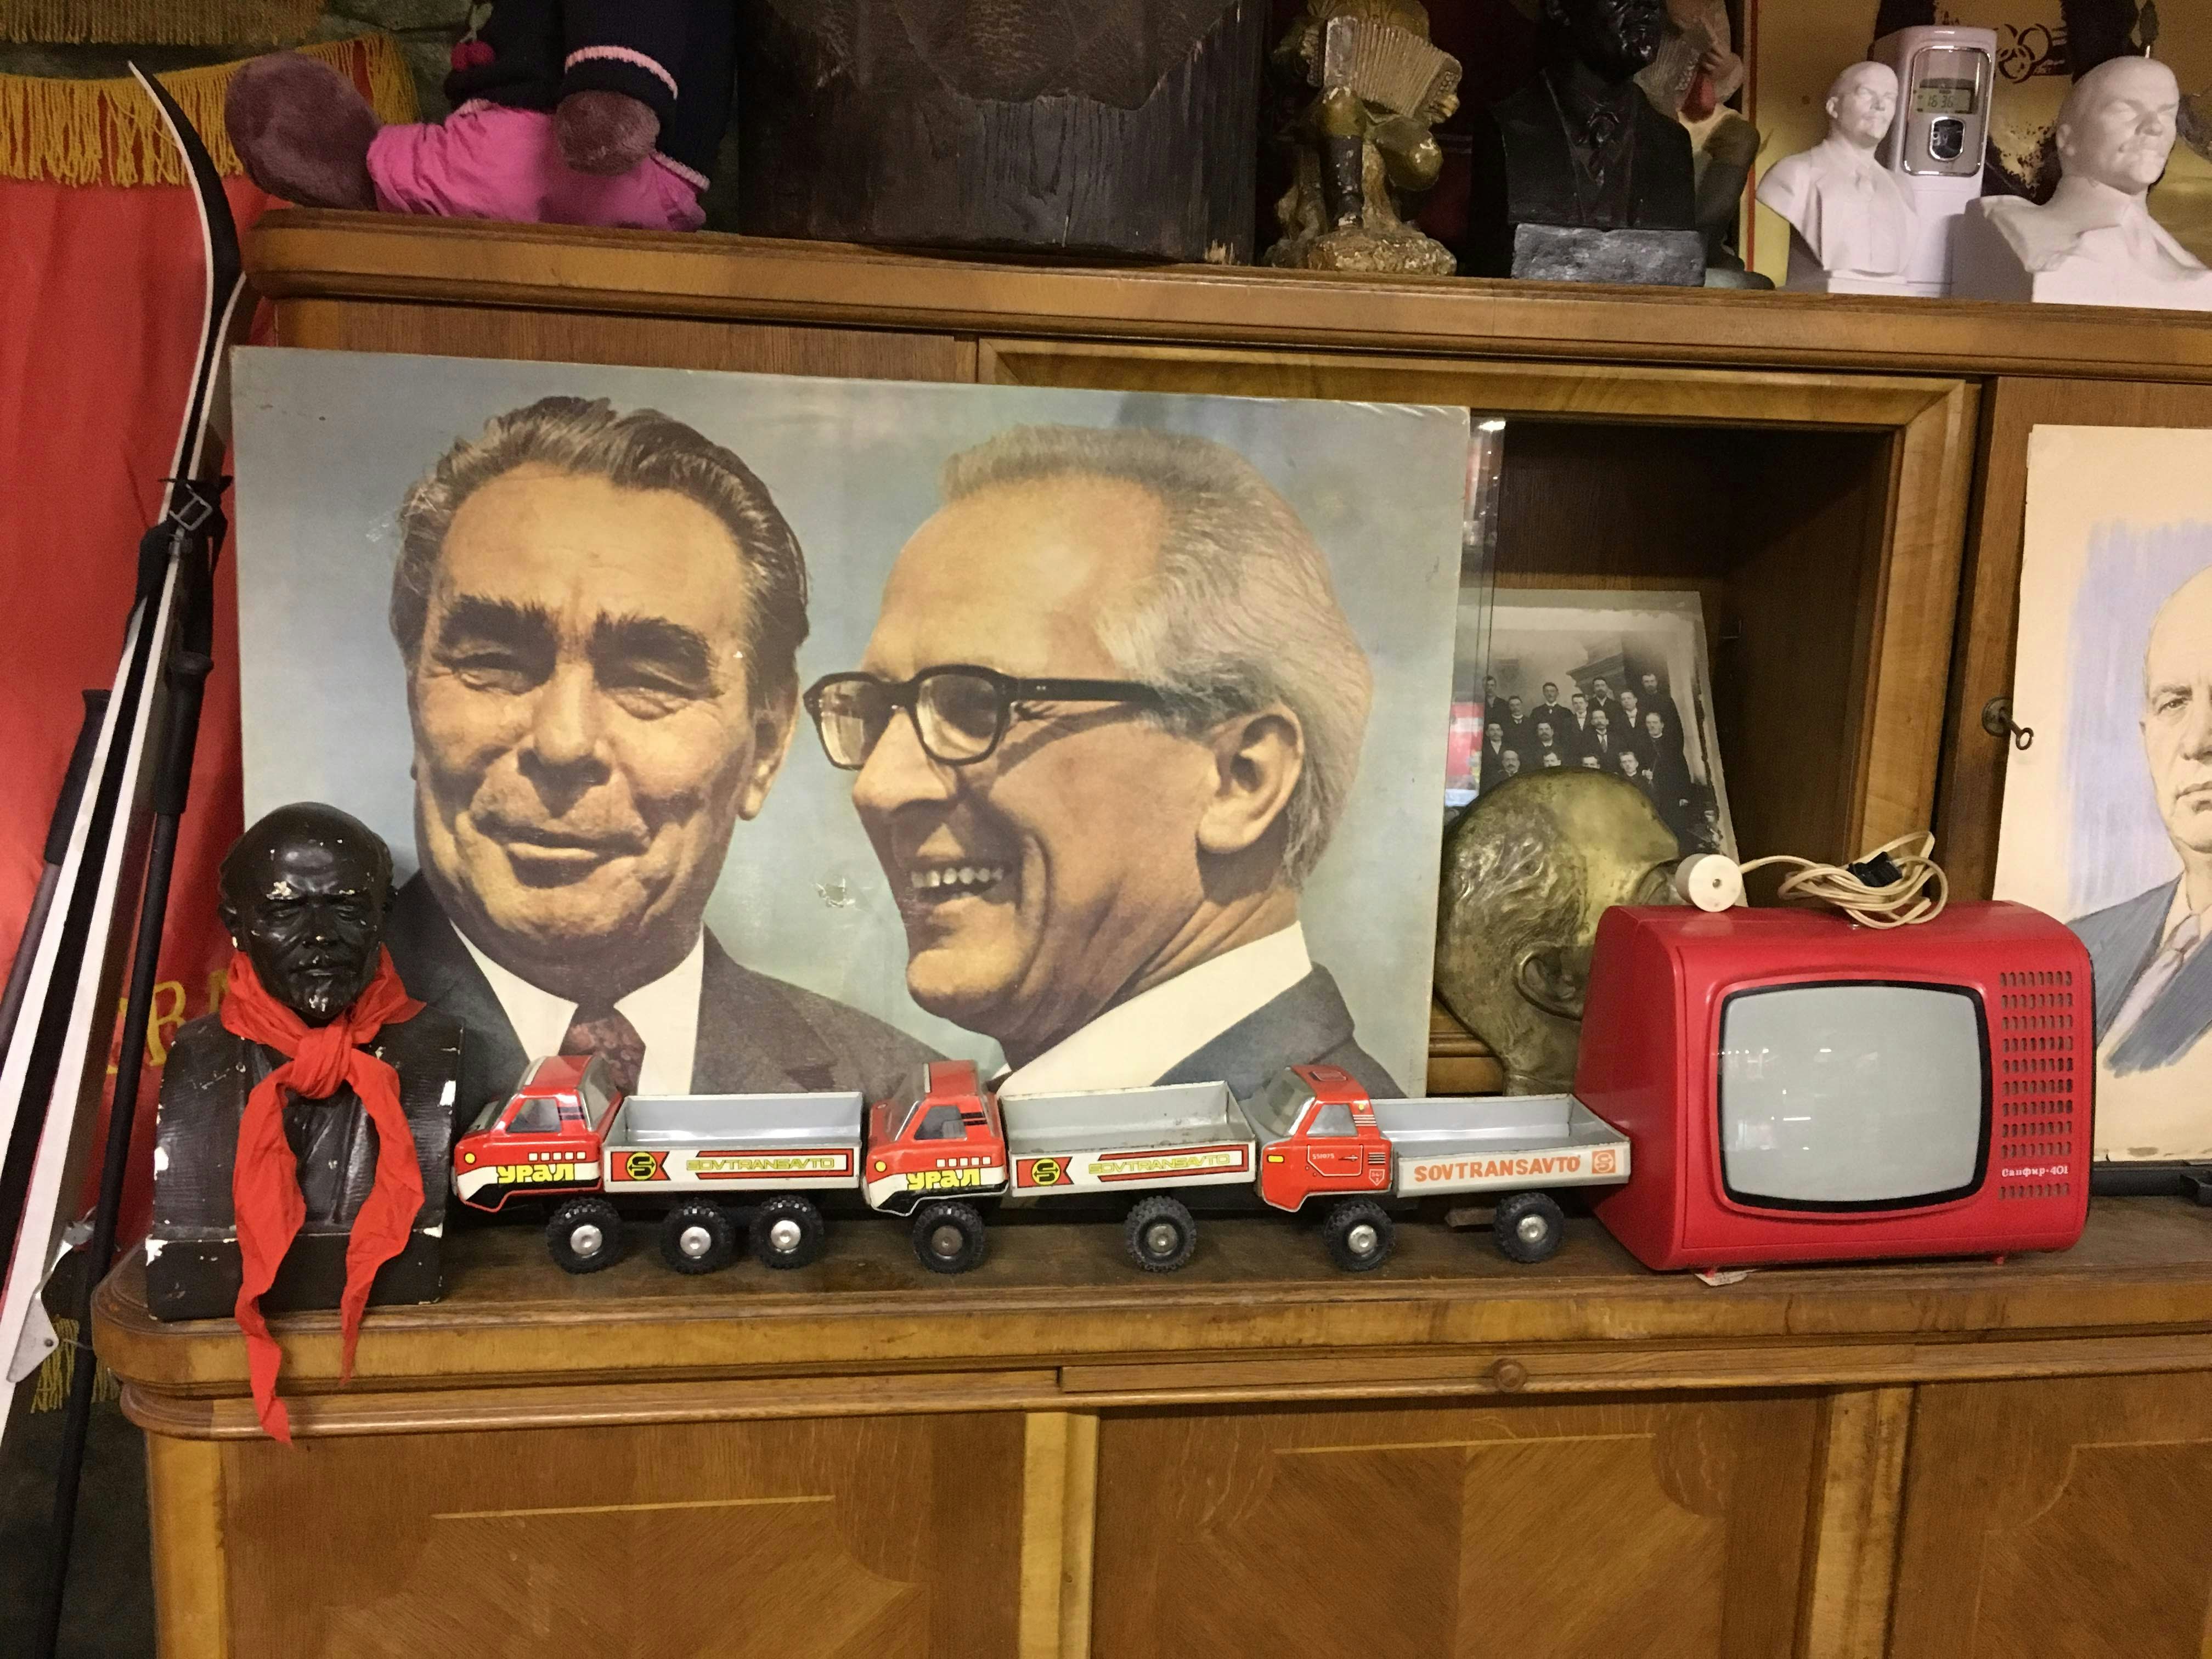 Russian memorabilia including a picture of politicians Brezhnev and Honecker, three small trucks and a bust of Lenin